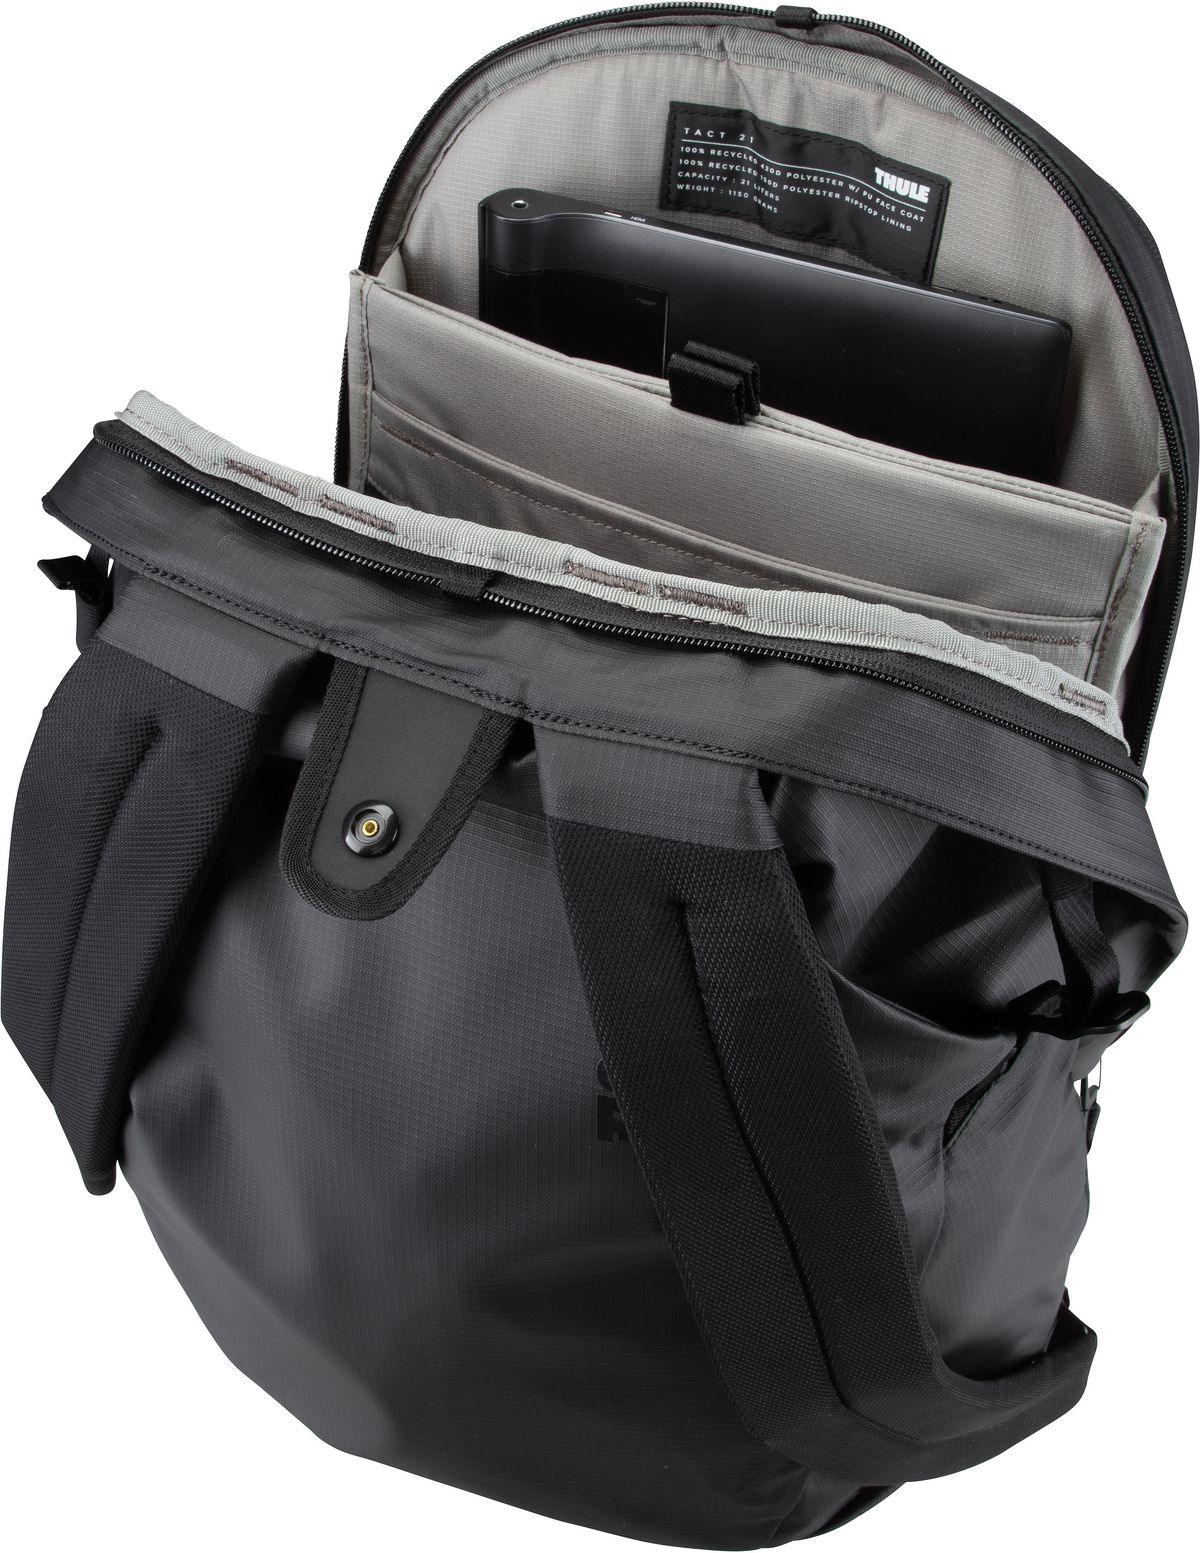 Thule Tact Backpack 21L - Black